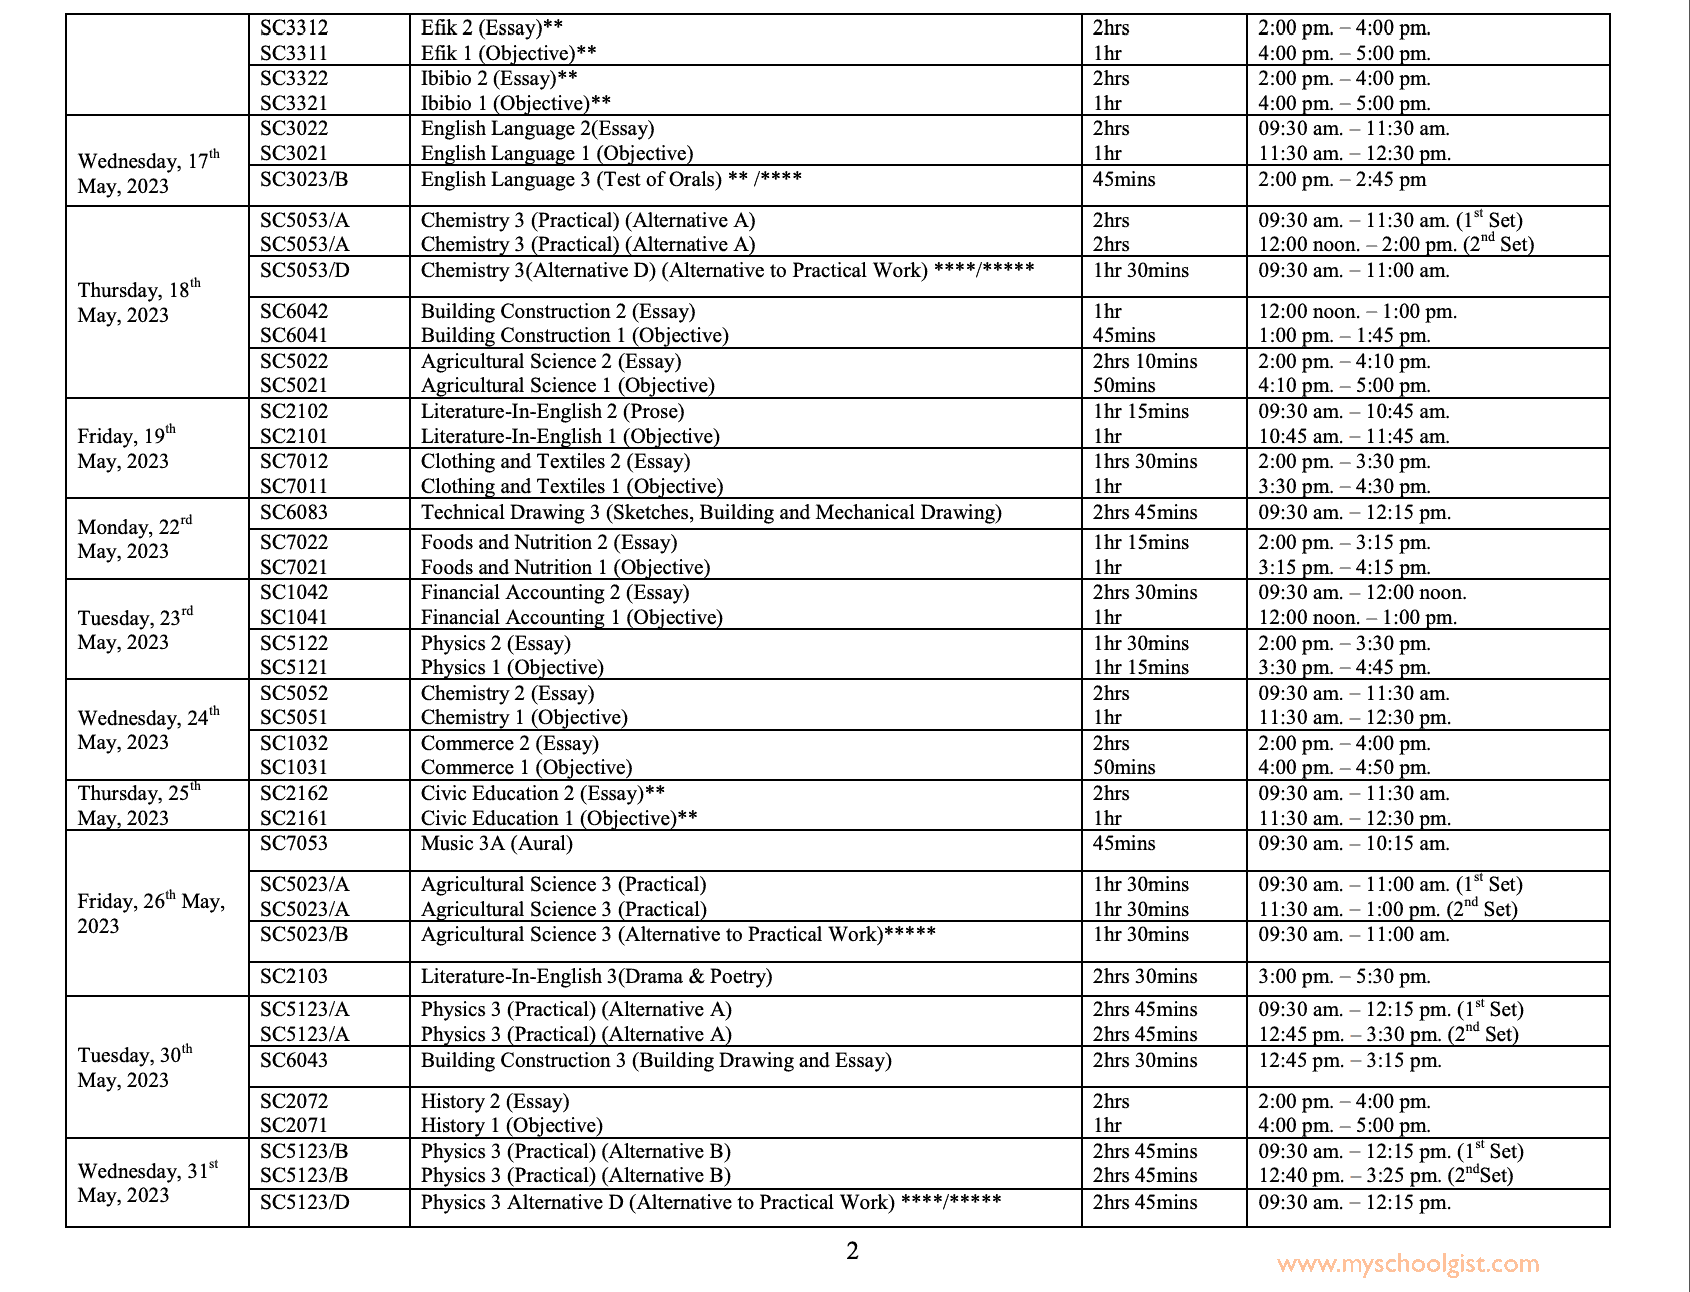 WAEC Timetable 2023 Final 2